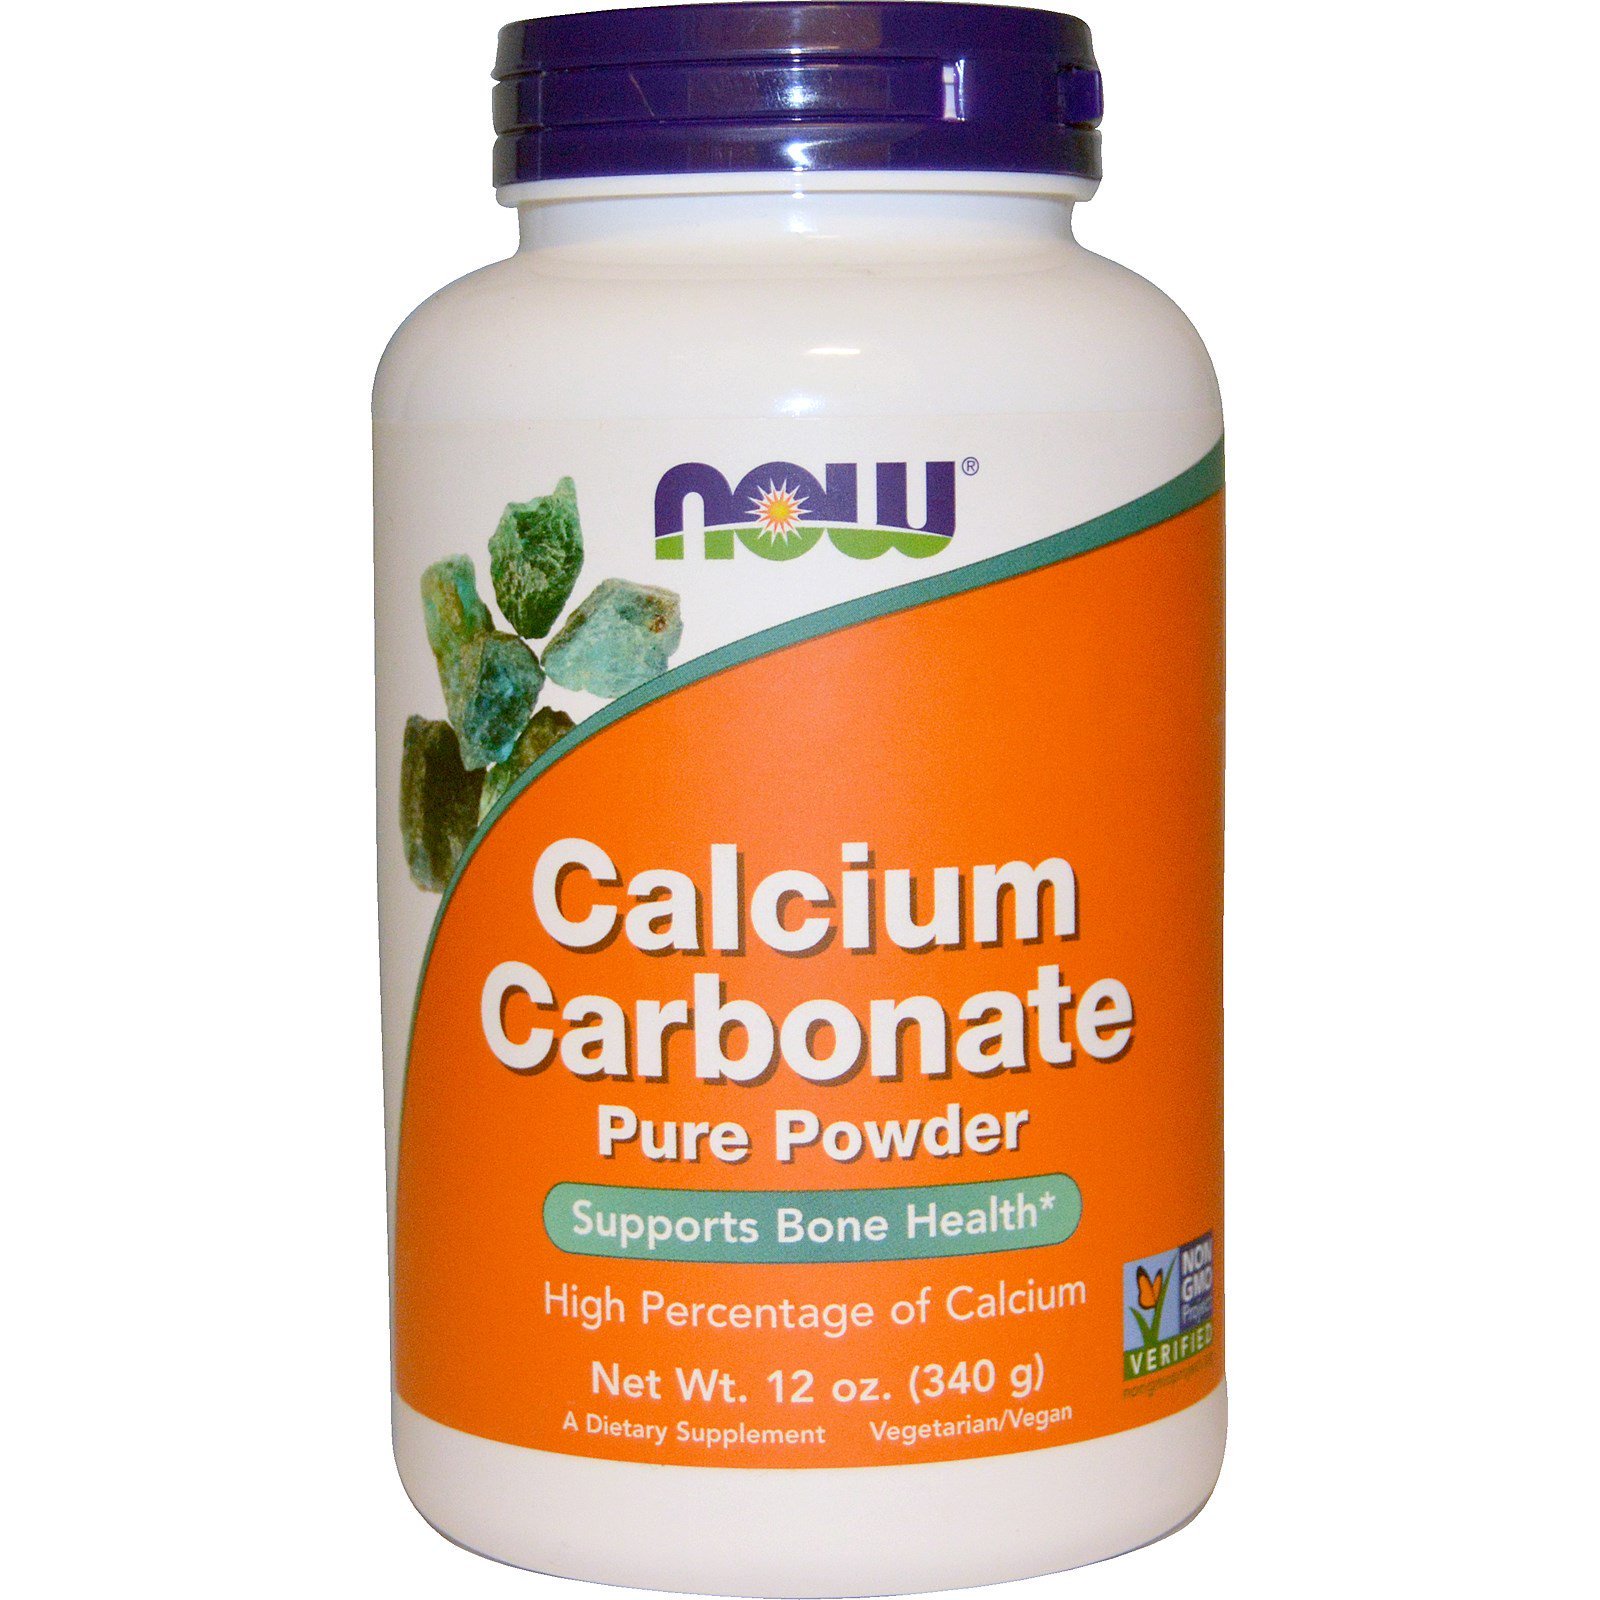 where can i buy calcium carbonate powder near me